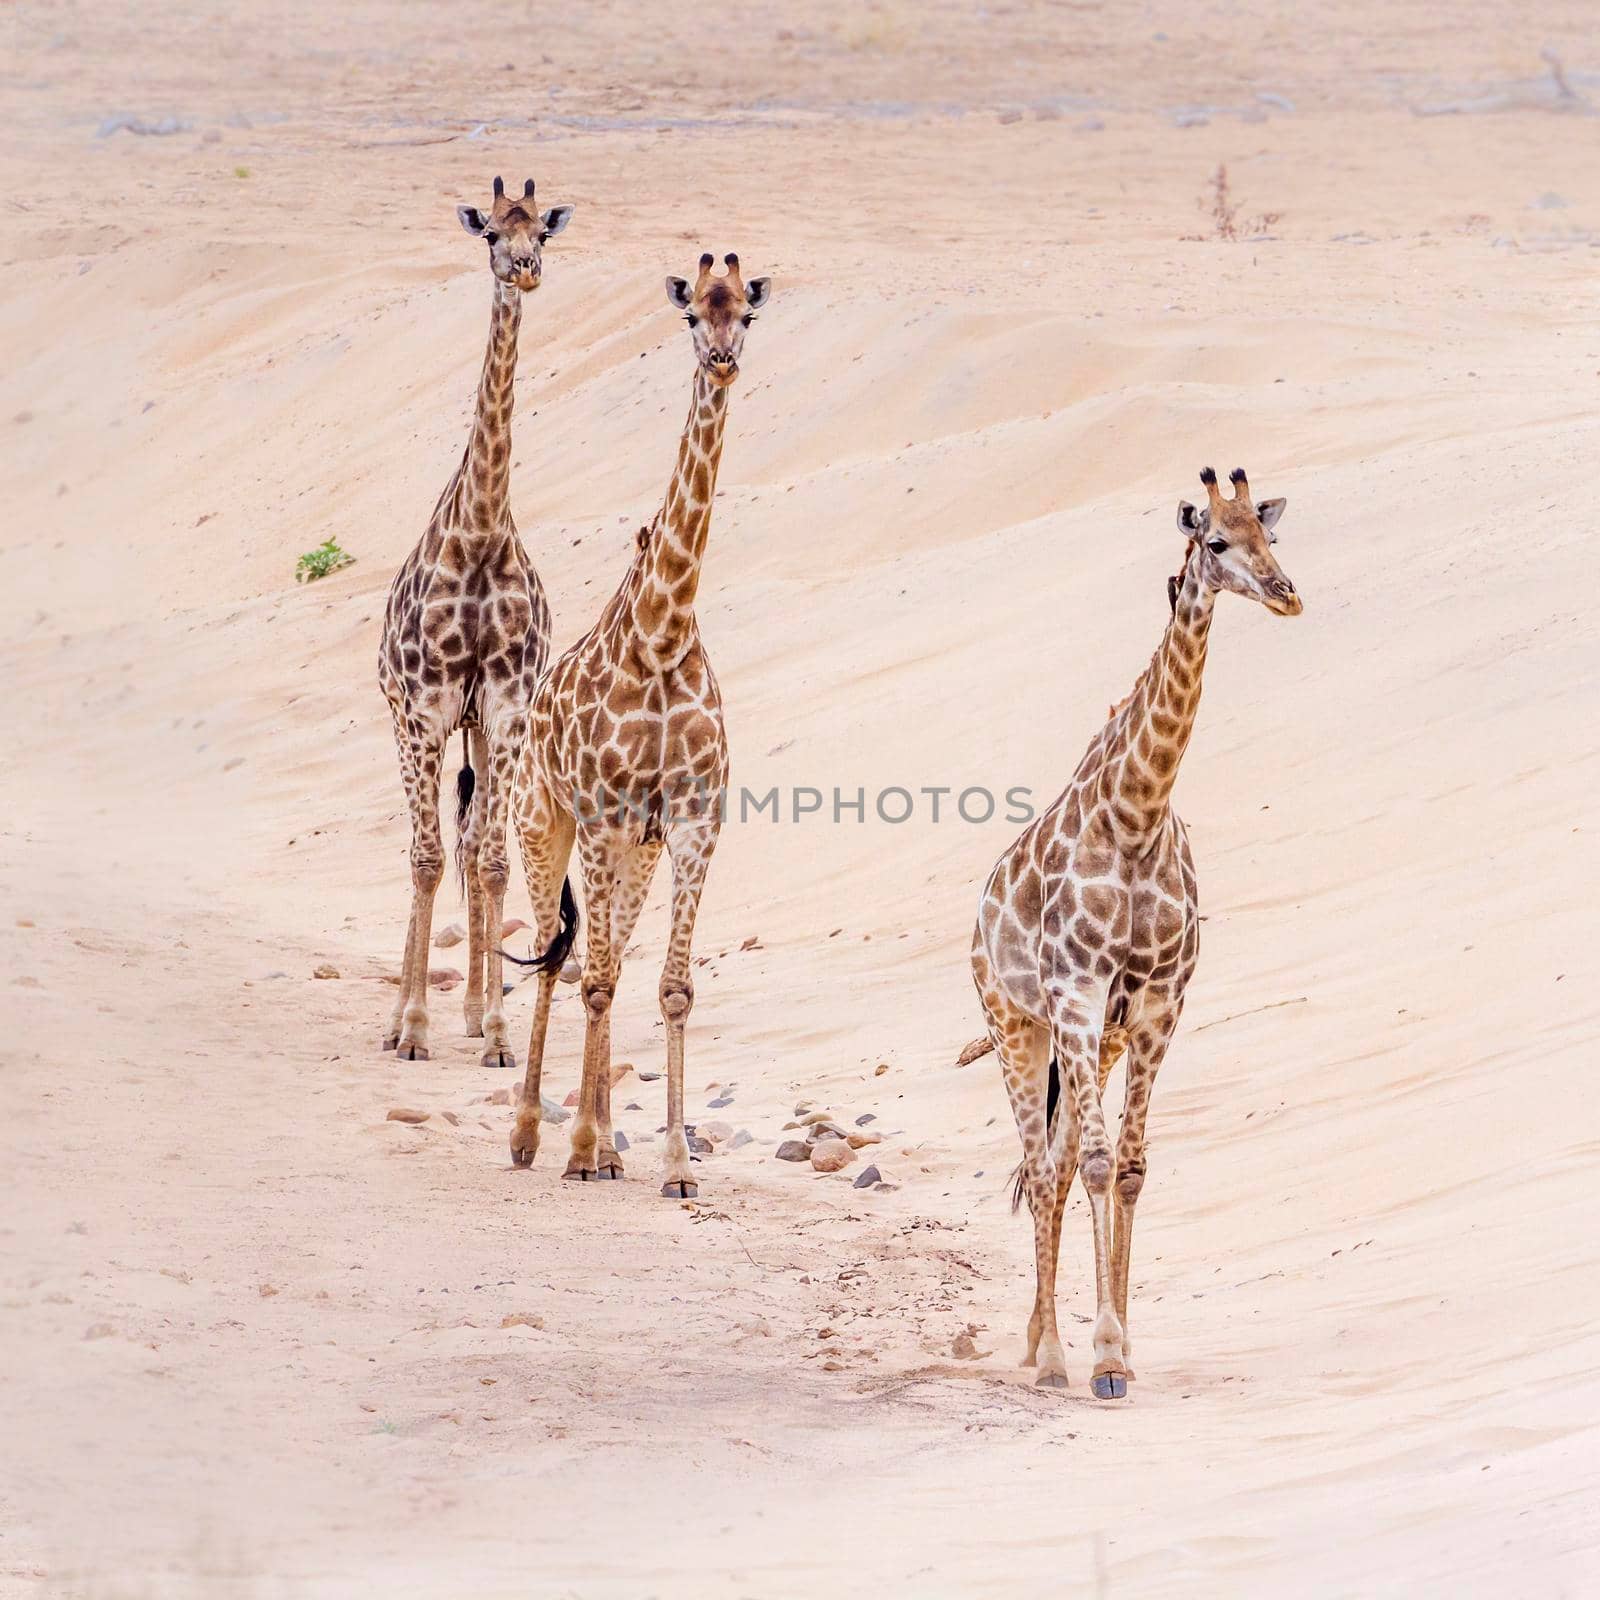 Giraffe in Kruger National park, South Africa ; Specie Giraffa camelopardalis family of Giraffidae